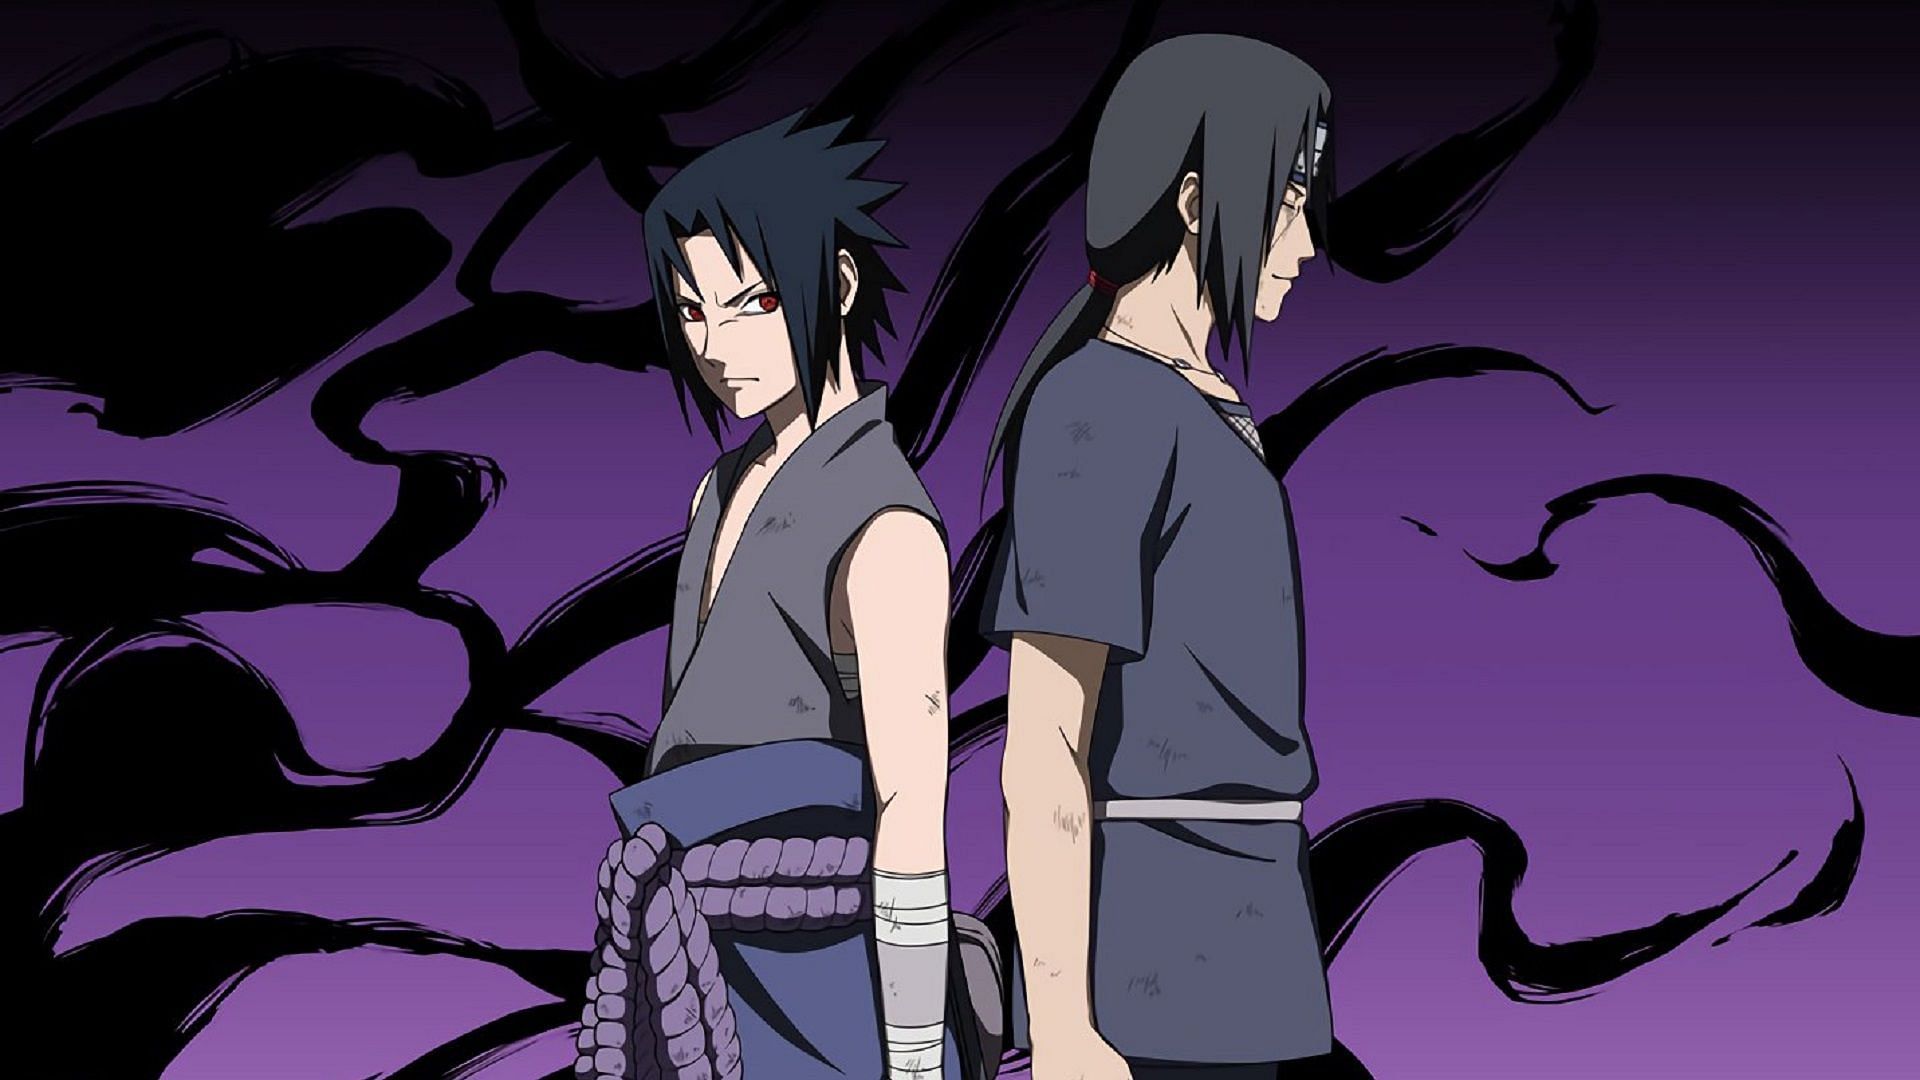 Sasuke and Itachi (Image via Studio Pierrot)